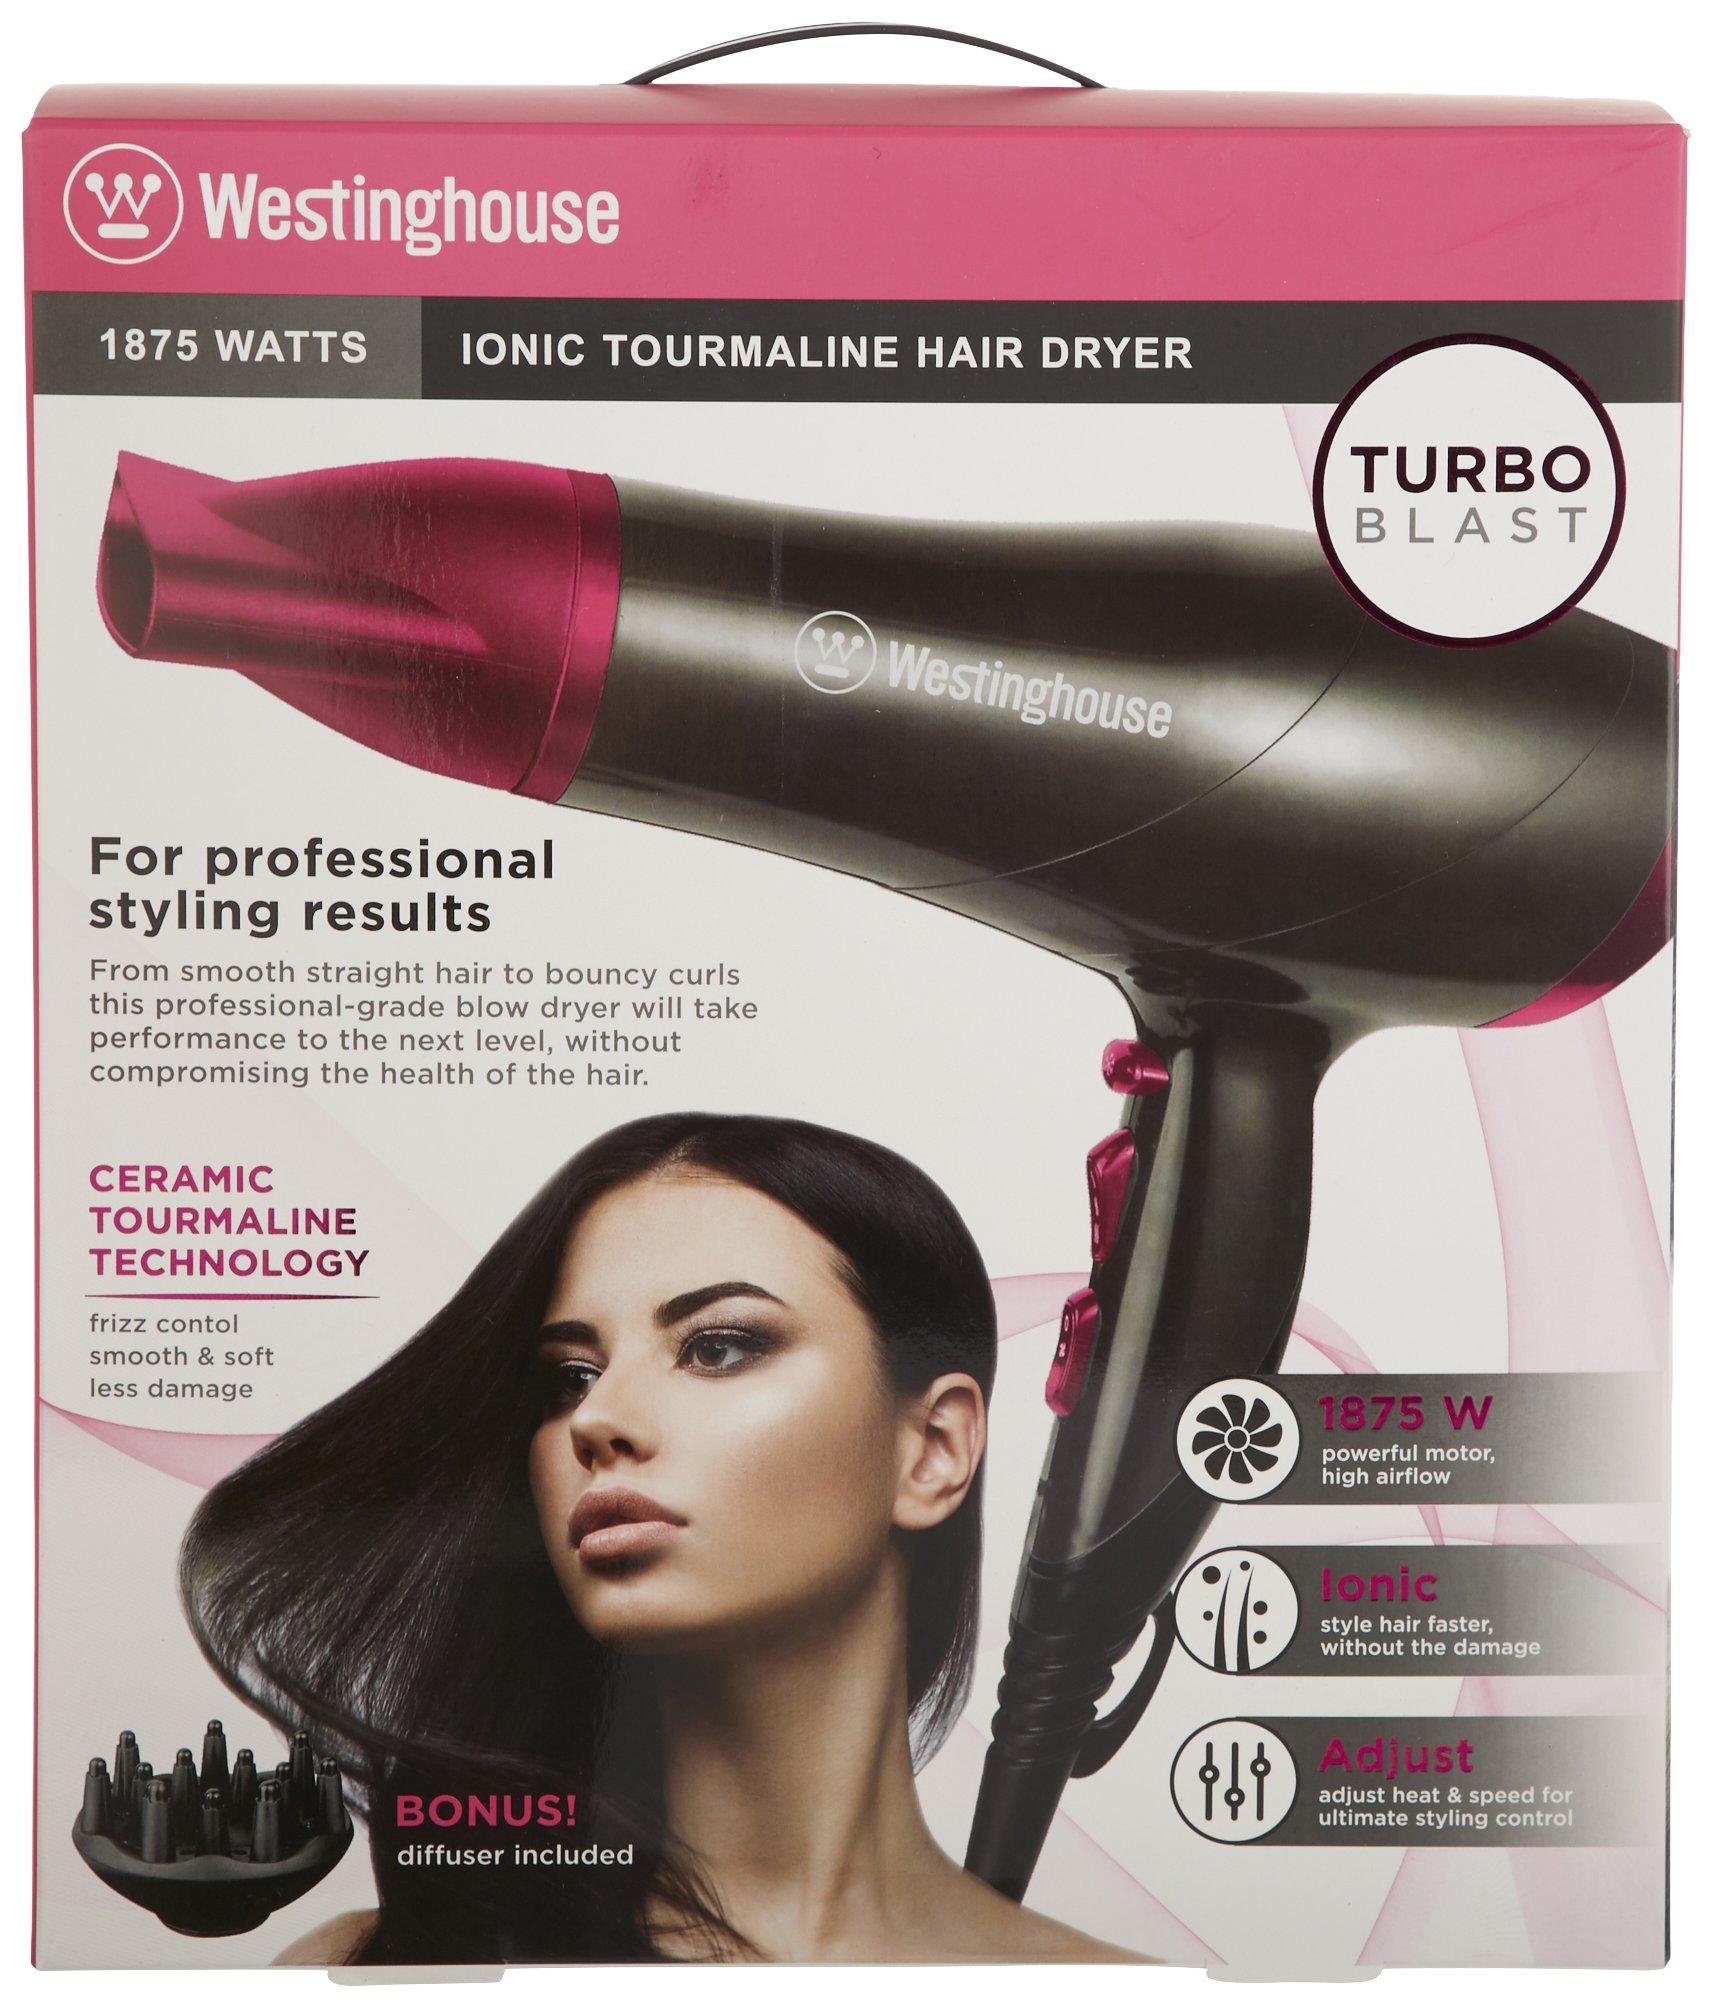 Iconic Tourmaline Turbo Blast Hair Dryer